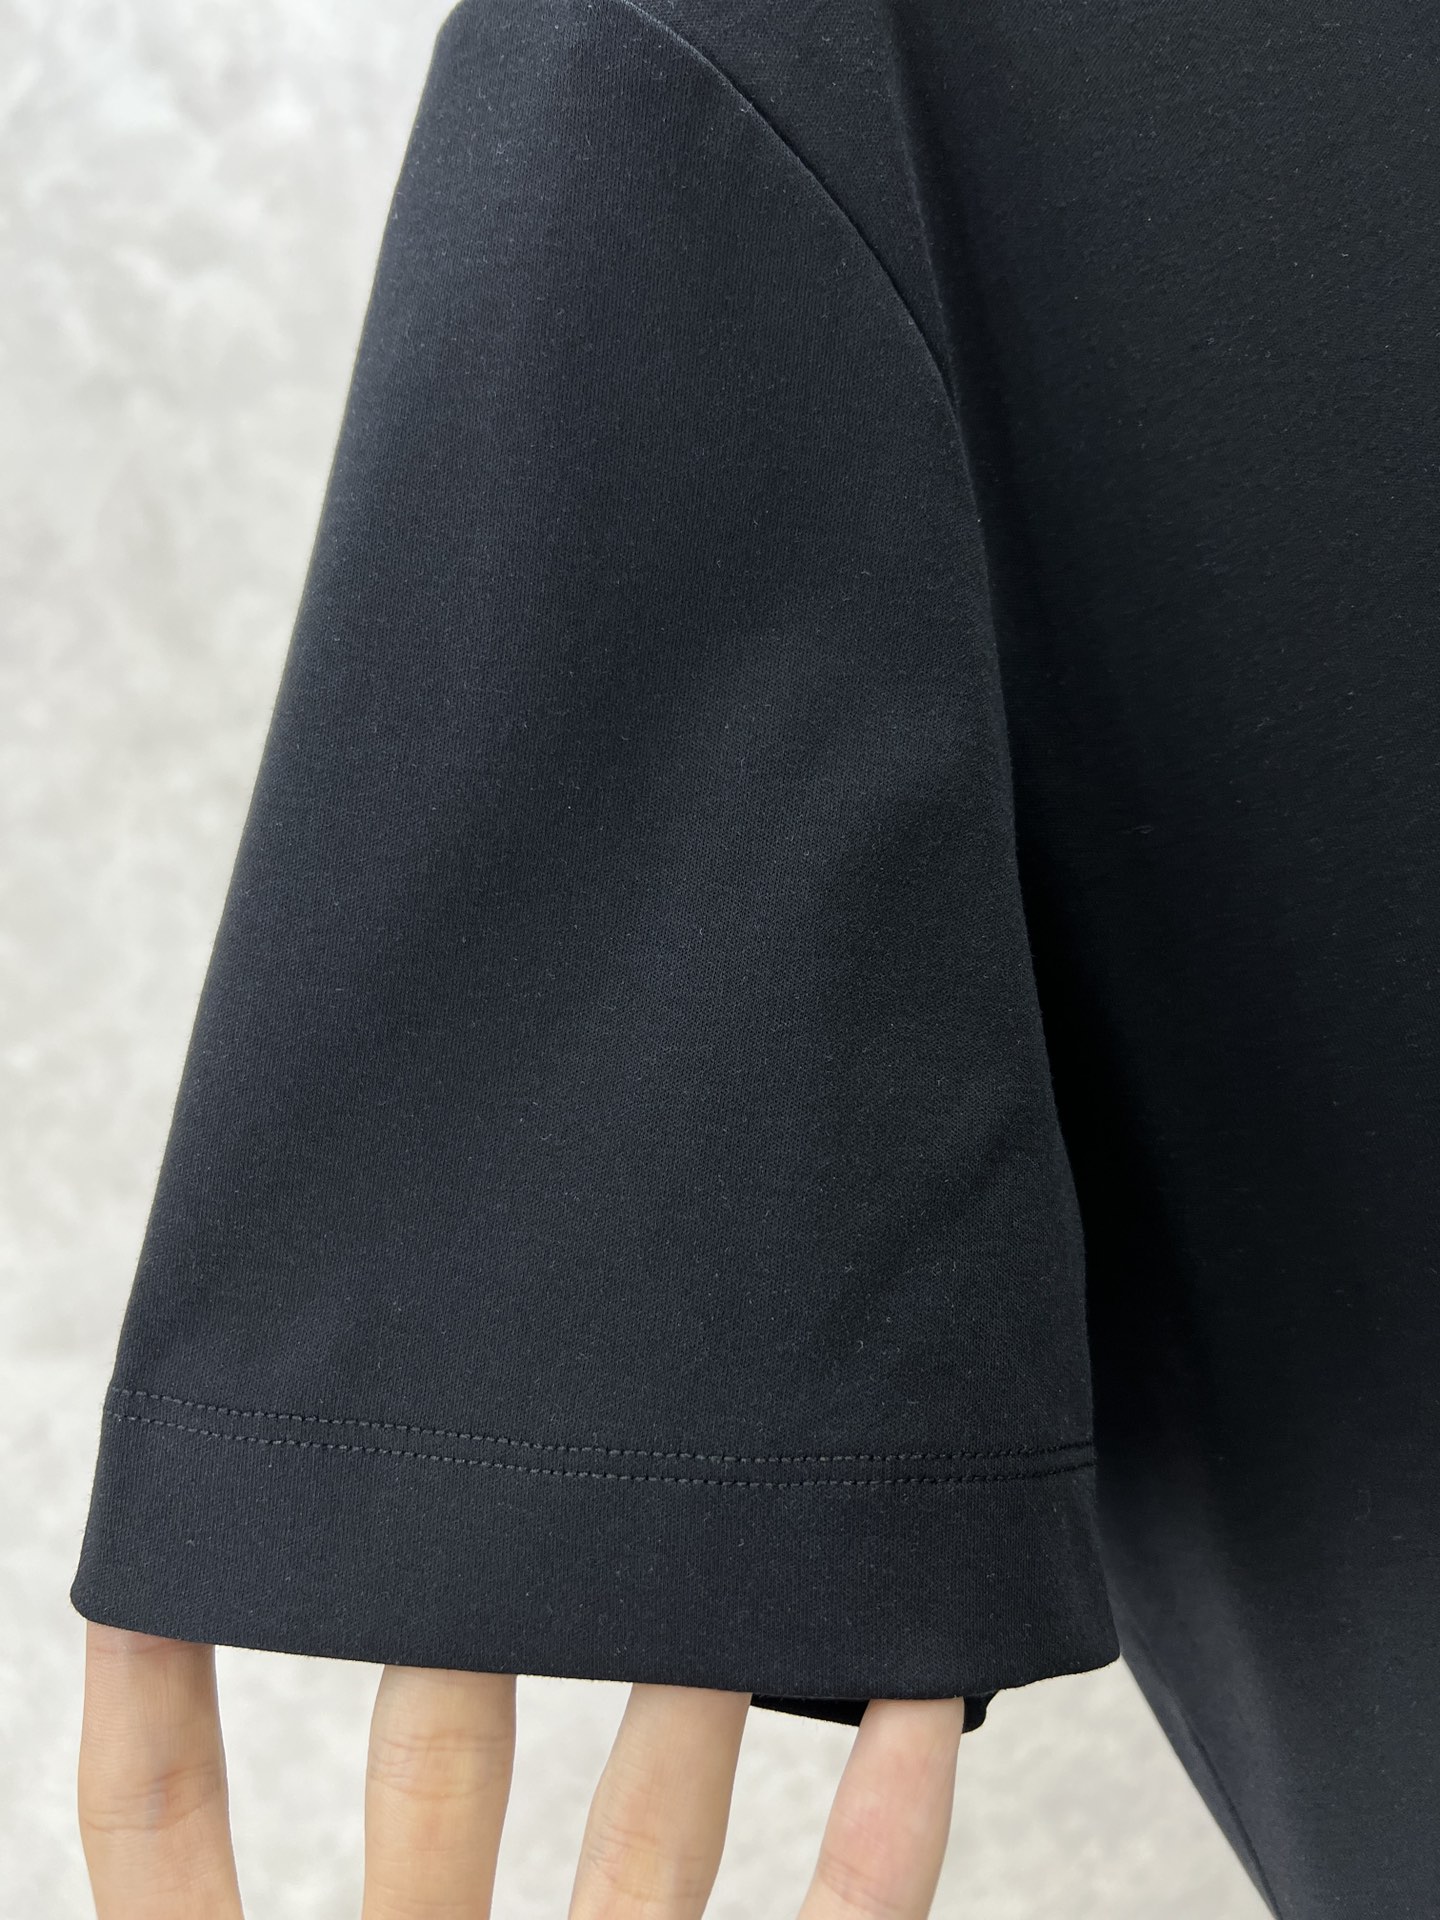 Burberry巴宝莉2024Ss最新款短袖T恤原标定制面料手感柔软穿着舒适做工精细.上身效果无敌帅气D